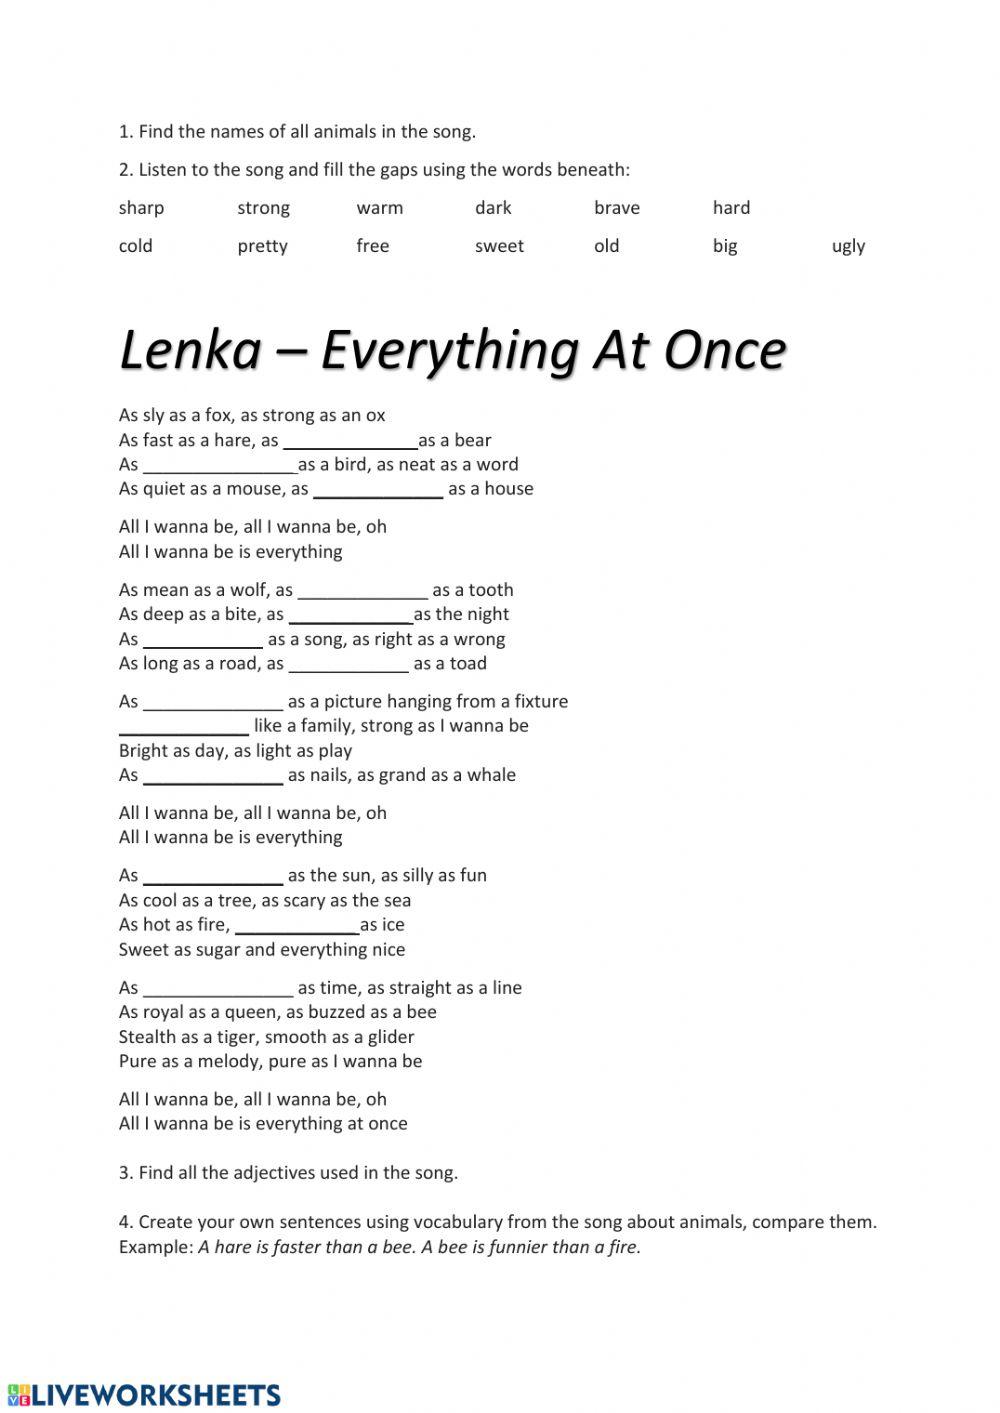 Lenka - everything at once